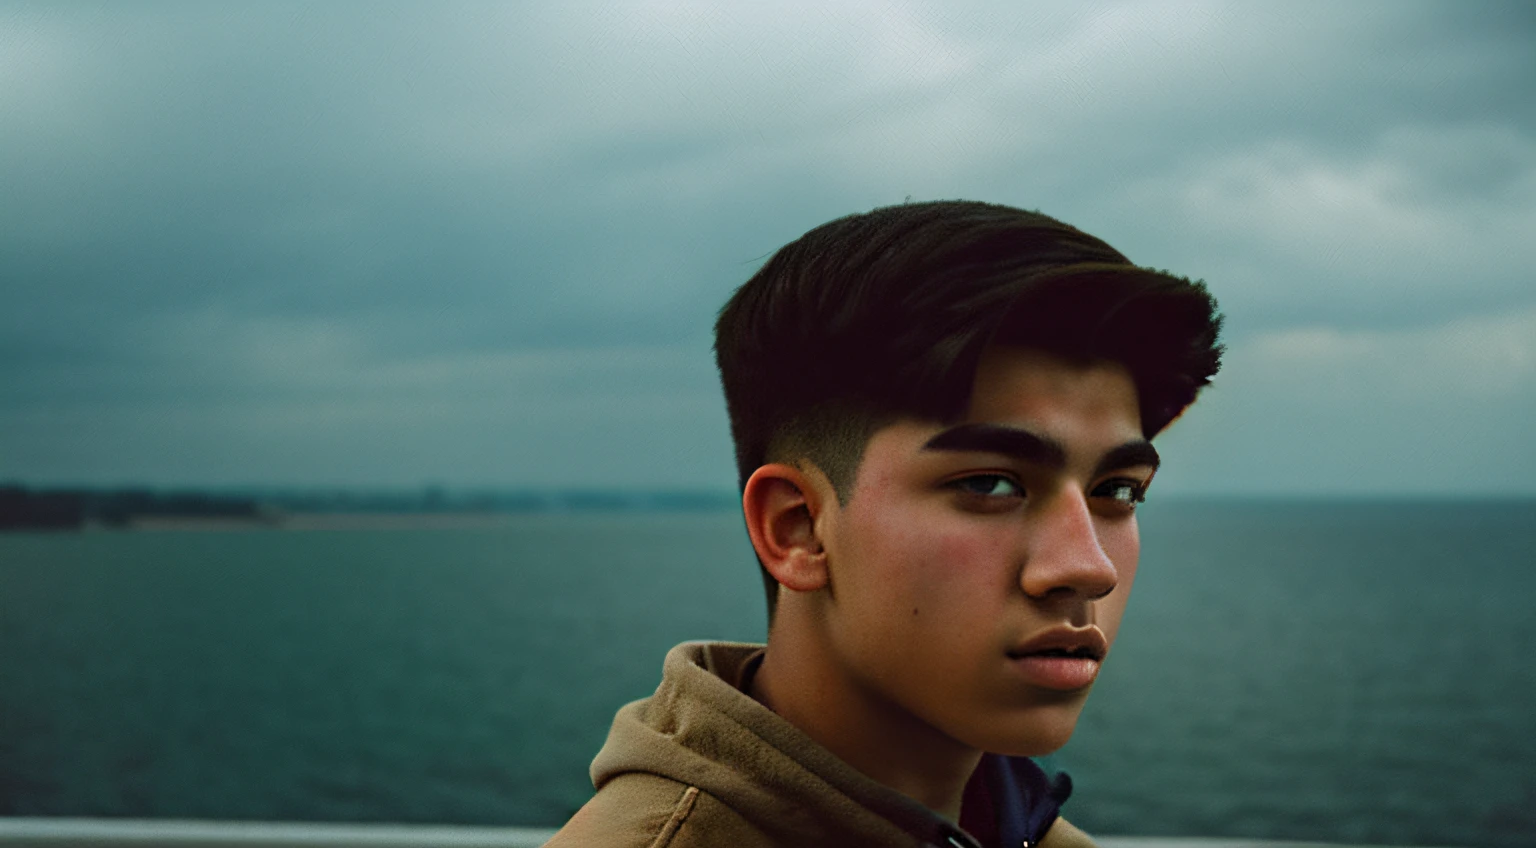 film photography portrait of a teenage guy, hyperrealistic, overcast lighting, shot on kodak portra 200, film grain, nostalgic mood